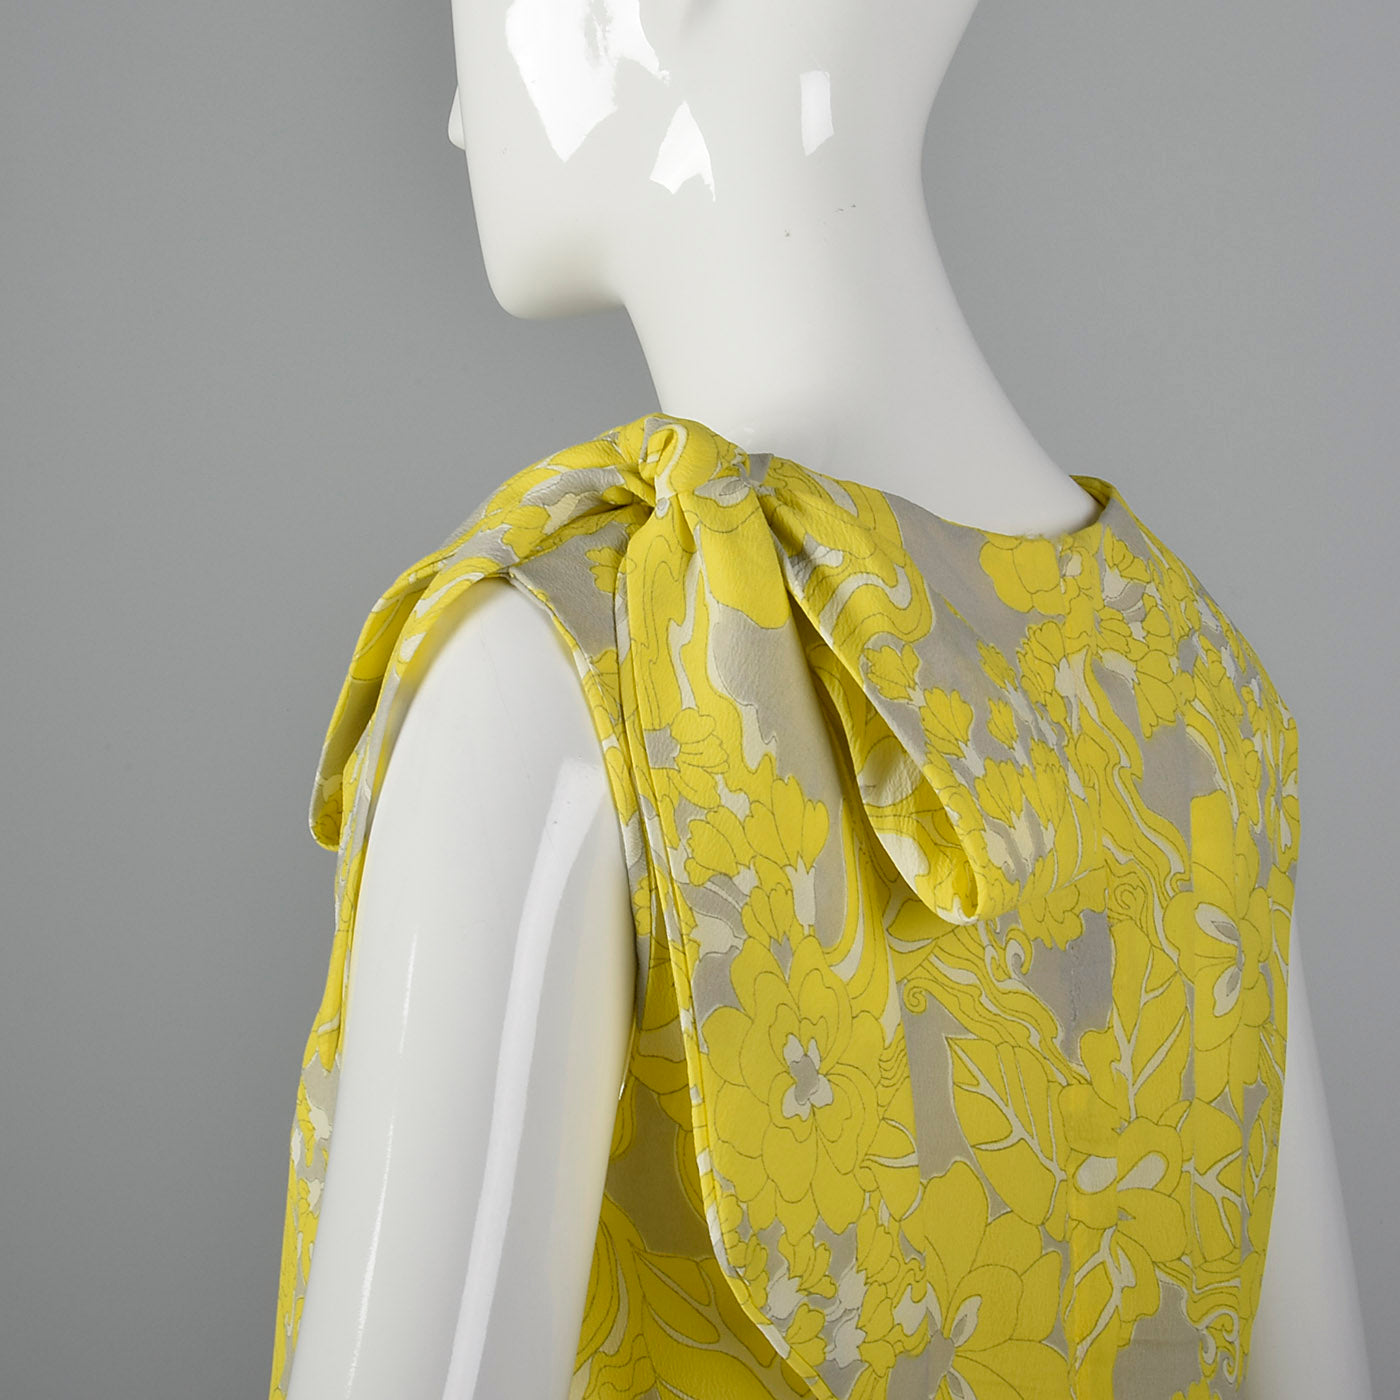 1960s Yellow Print Shift Dress with Drop Waist